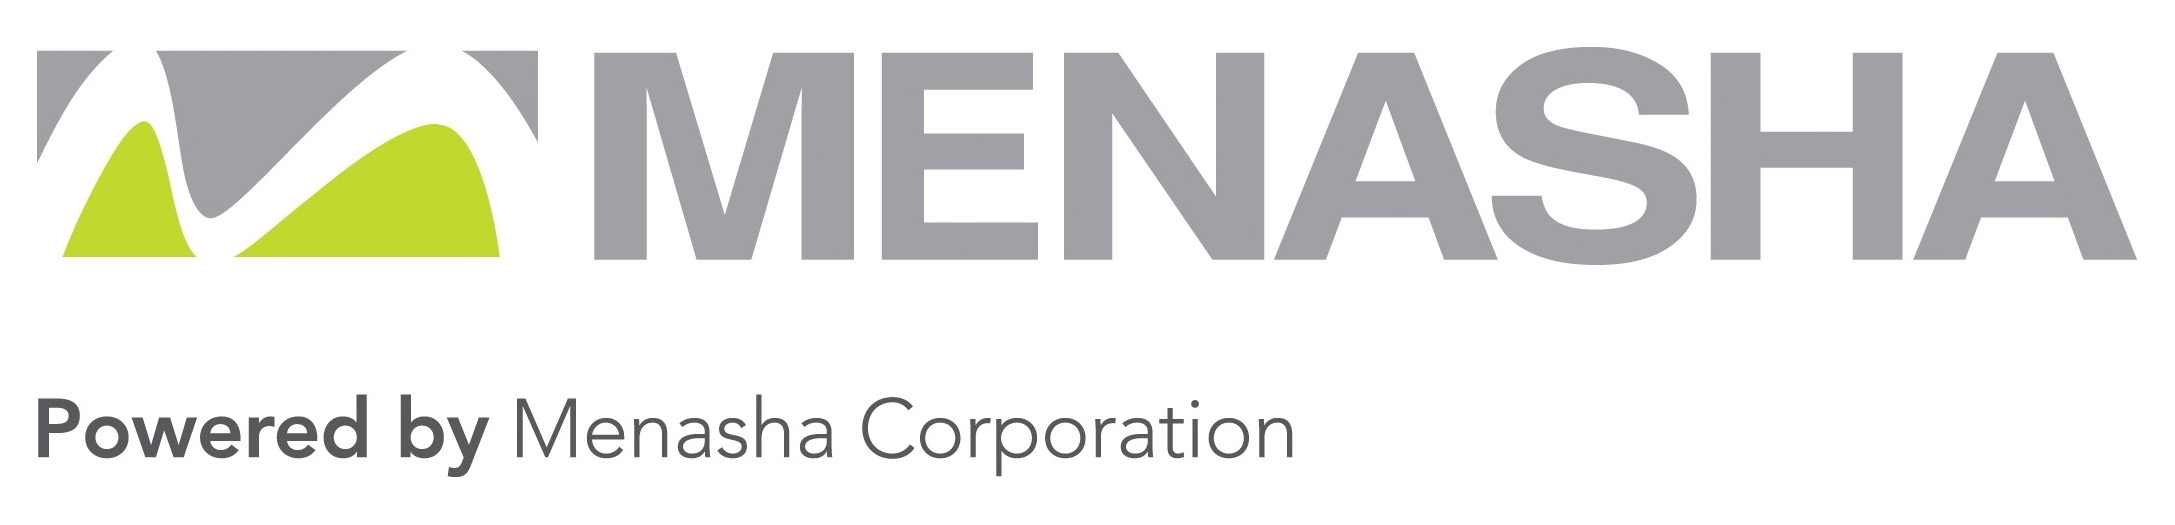 Menasha Packaging logo